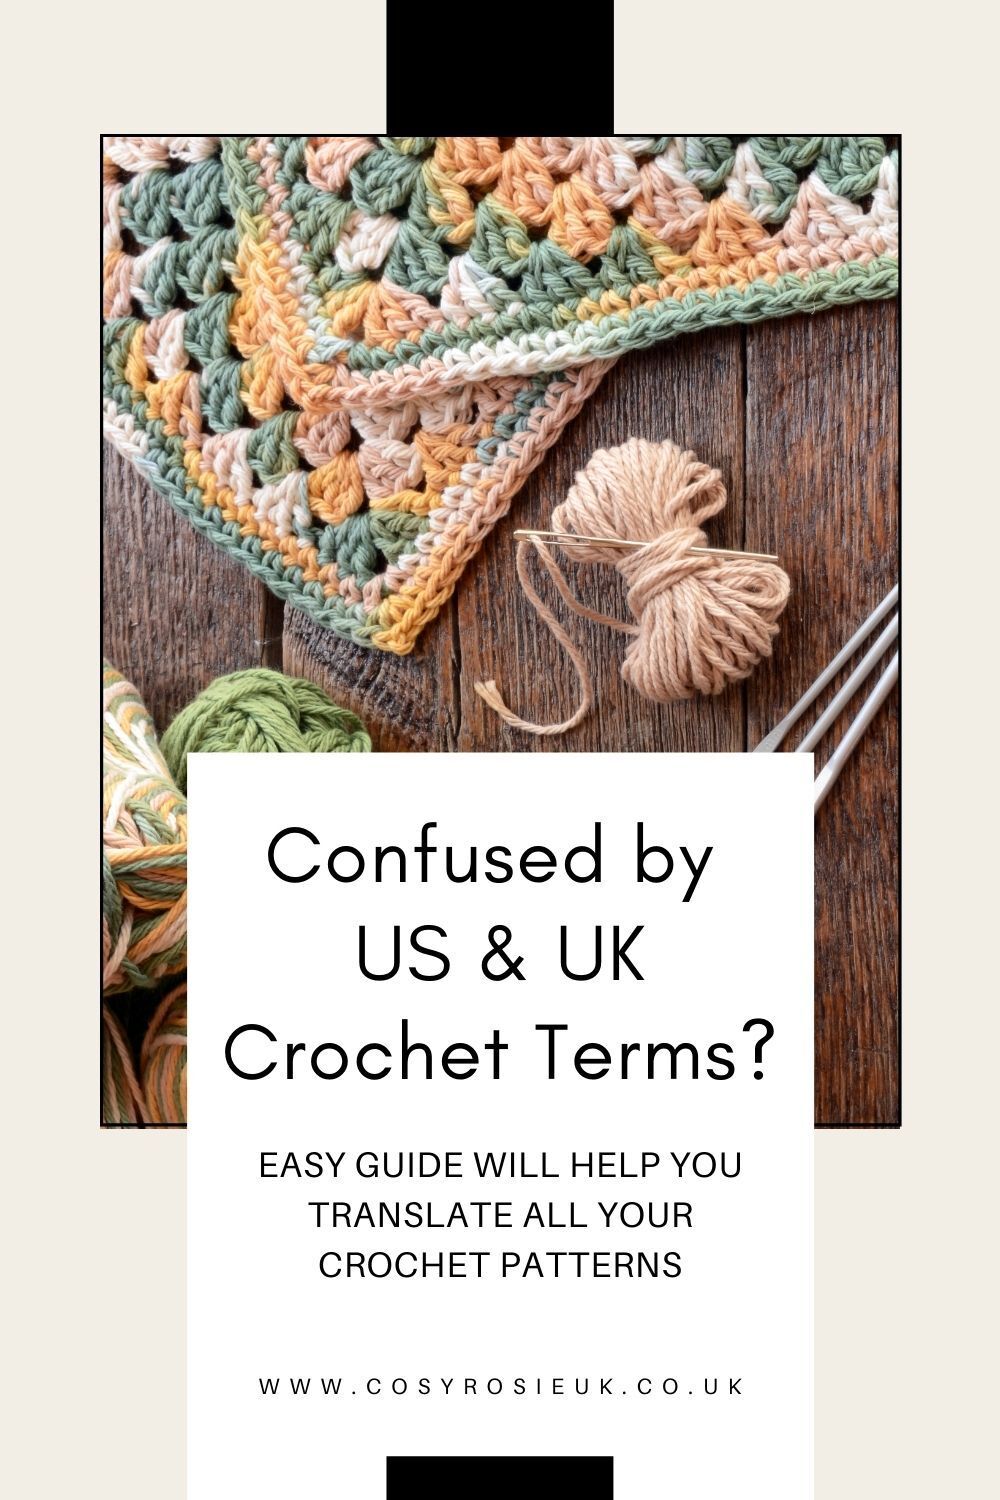 Confused between US & UK crochet terms?